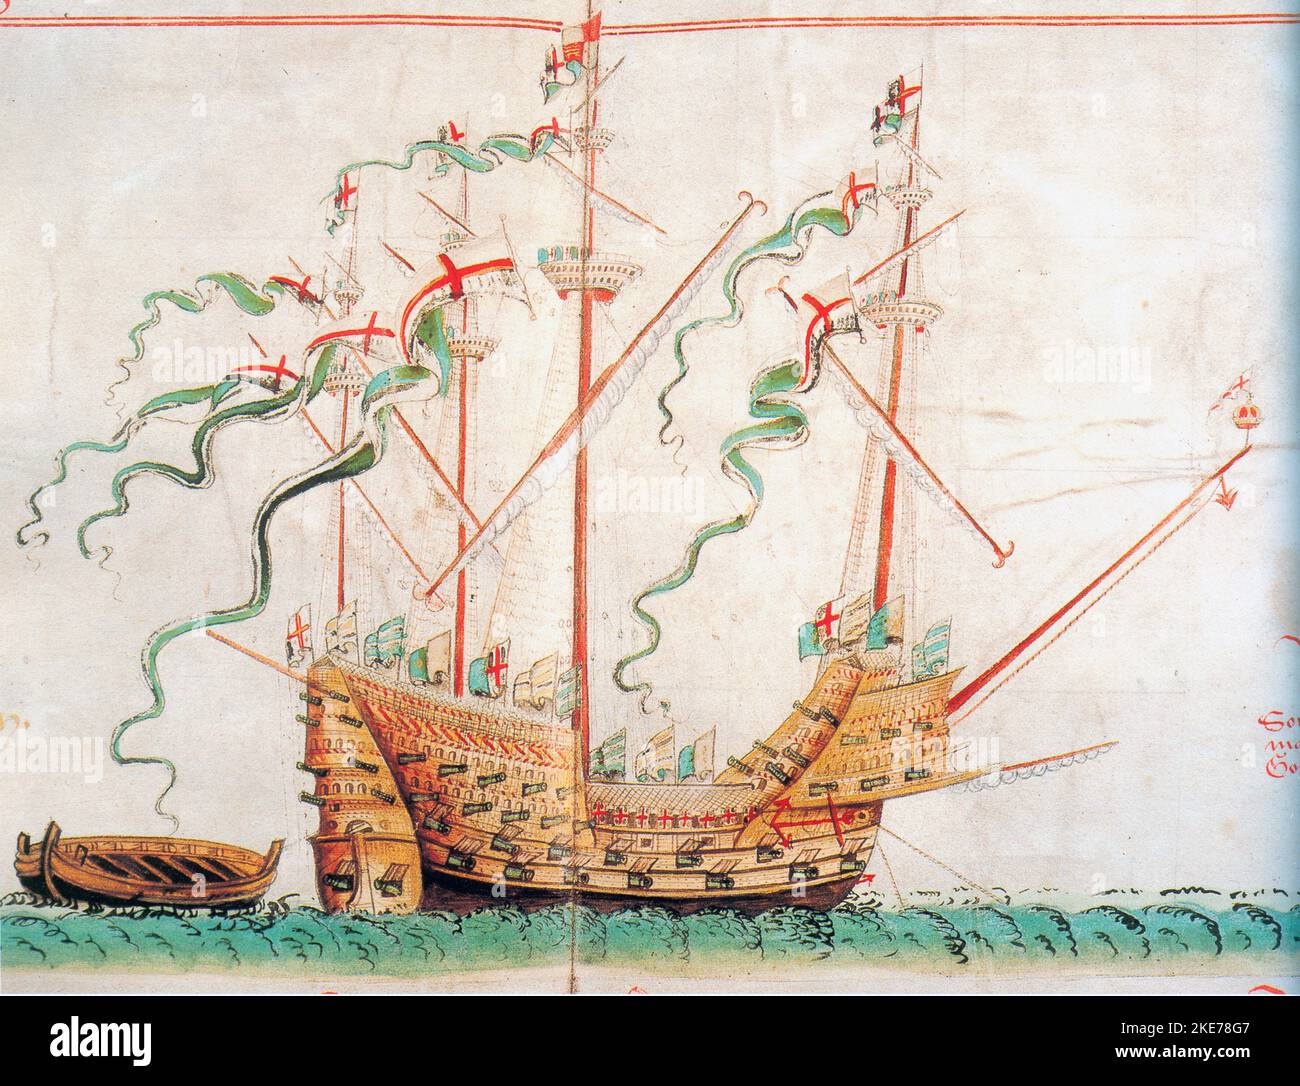 Il carrack Henri Grace à Dieu, Henry Grace à Dieu ('Henry, grazie a Dio'), noto anche come Grande Harry, carrack inglese o 'grande nave' della flotta del re nel 16th ° secolo Foto Stock